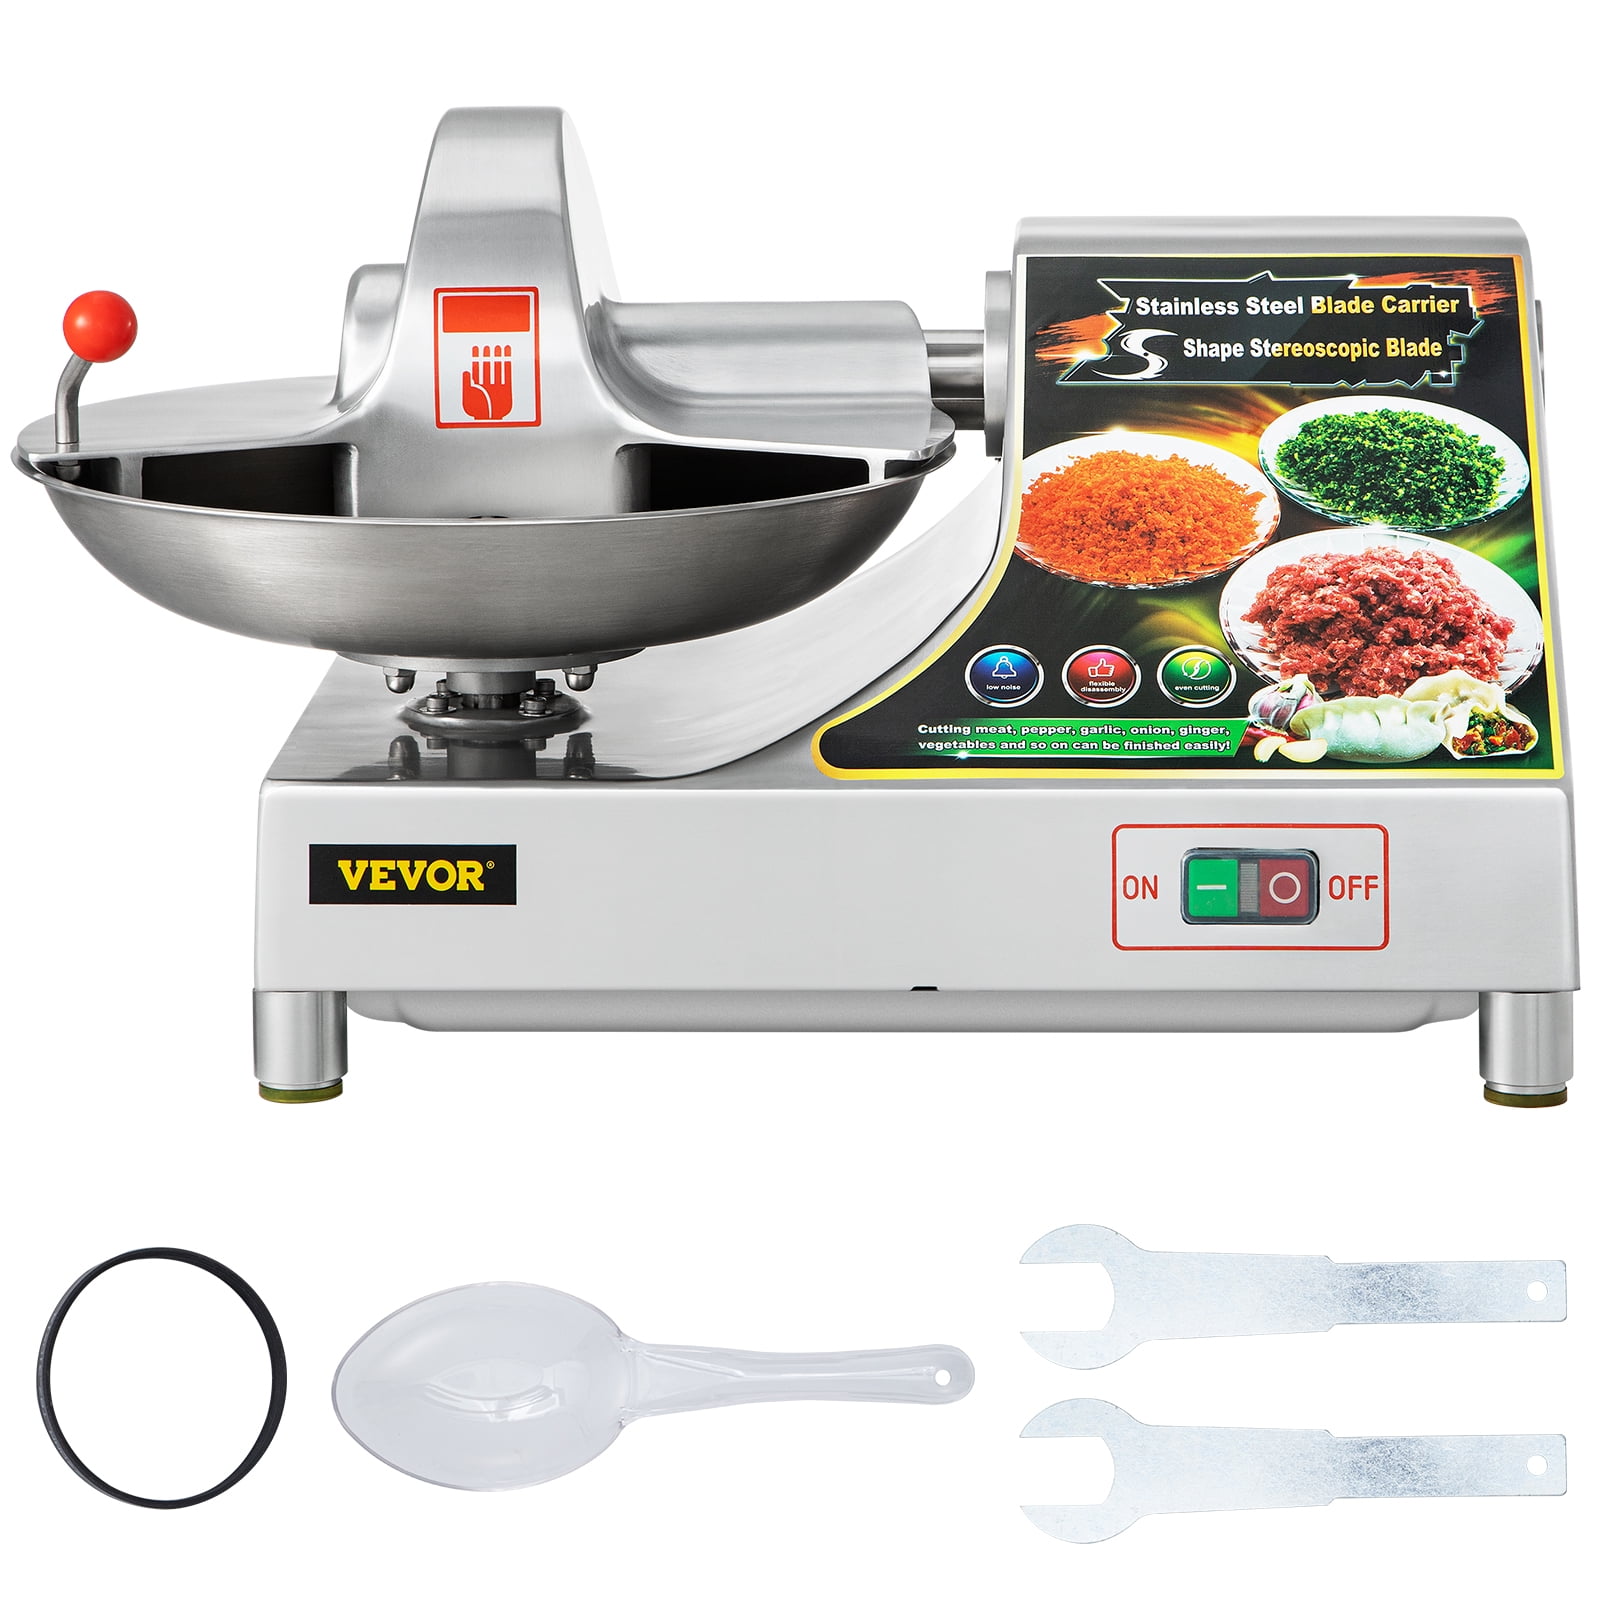 Meat Processing Machinery Meat Grinder Triturador De Carne (TK-52) - China  Meat Chopper, Meat Grinder